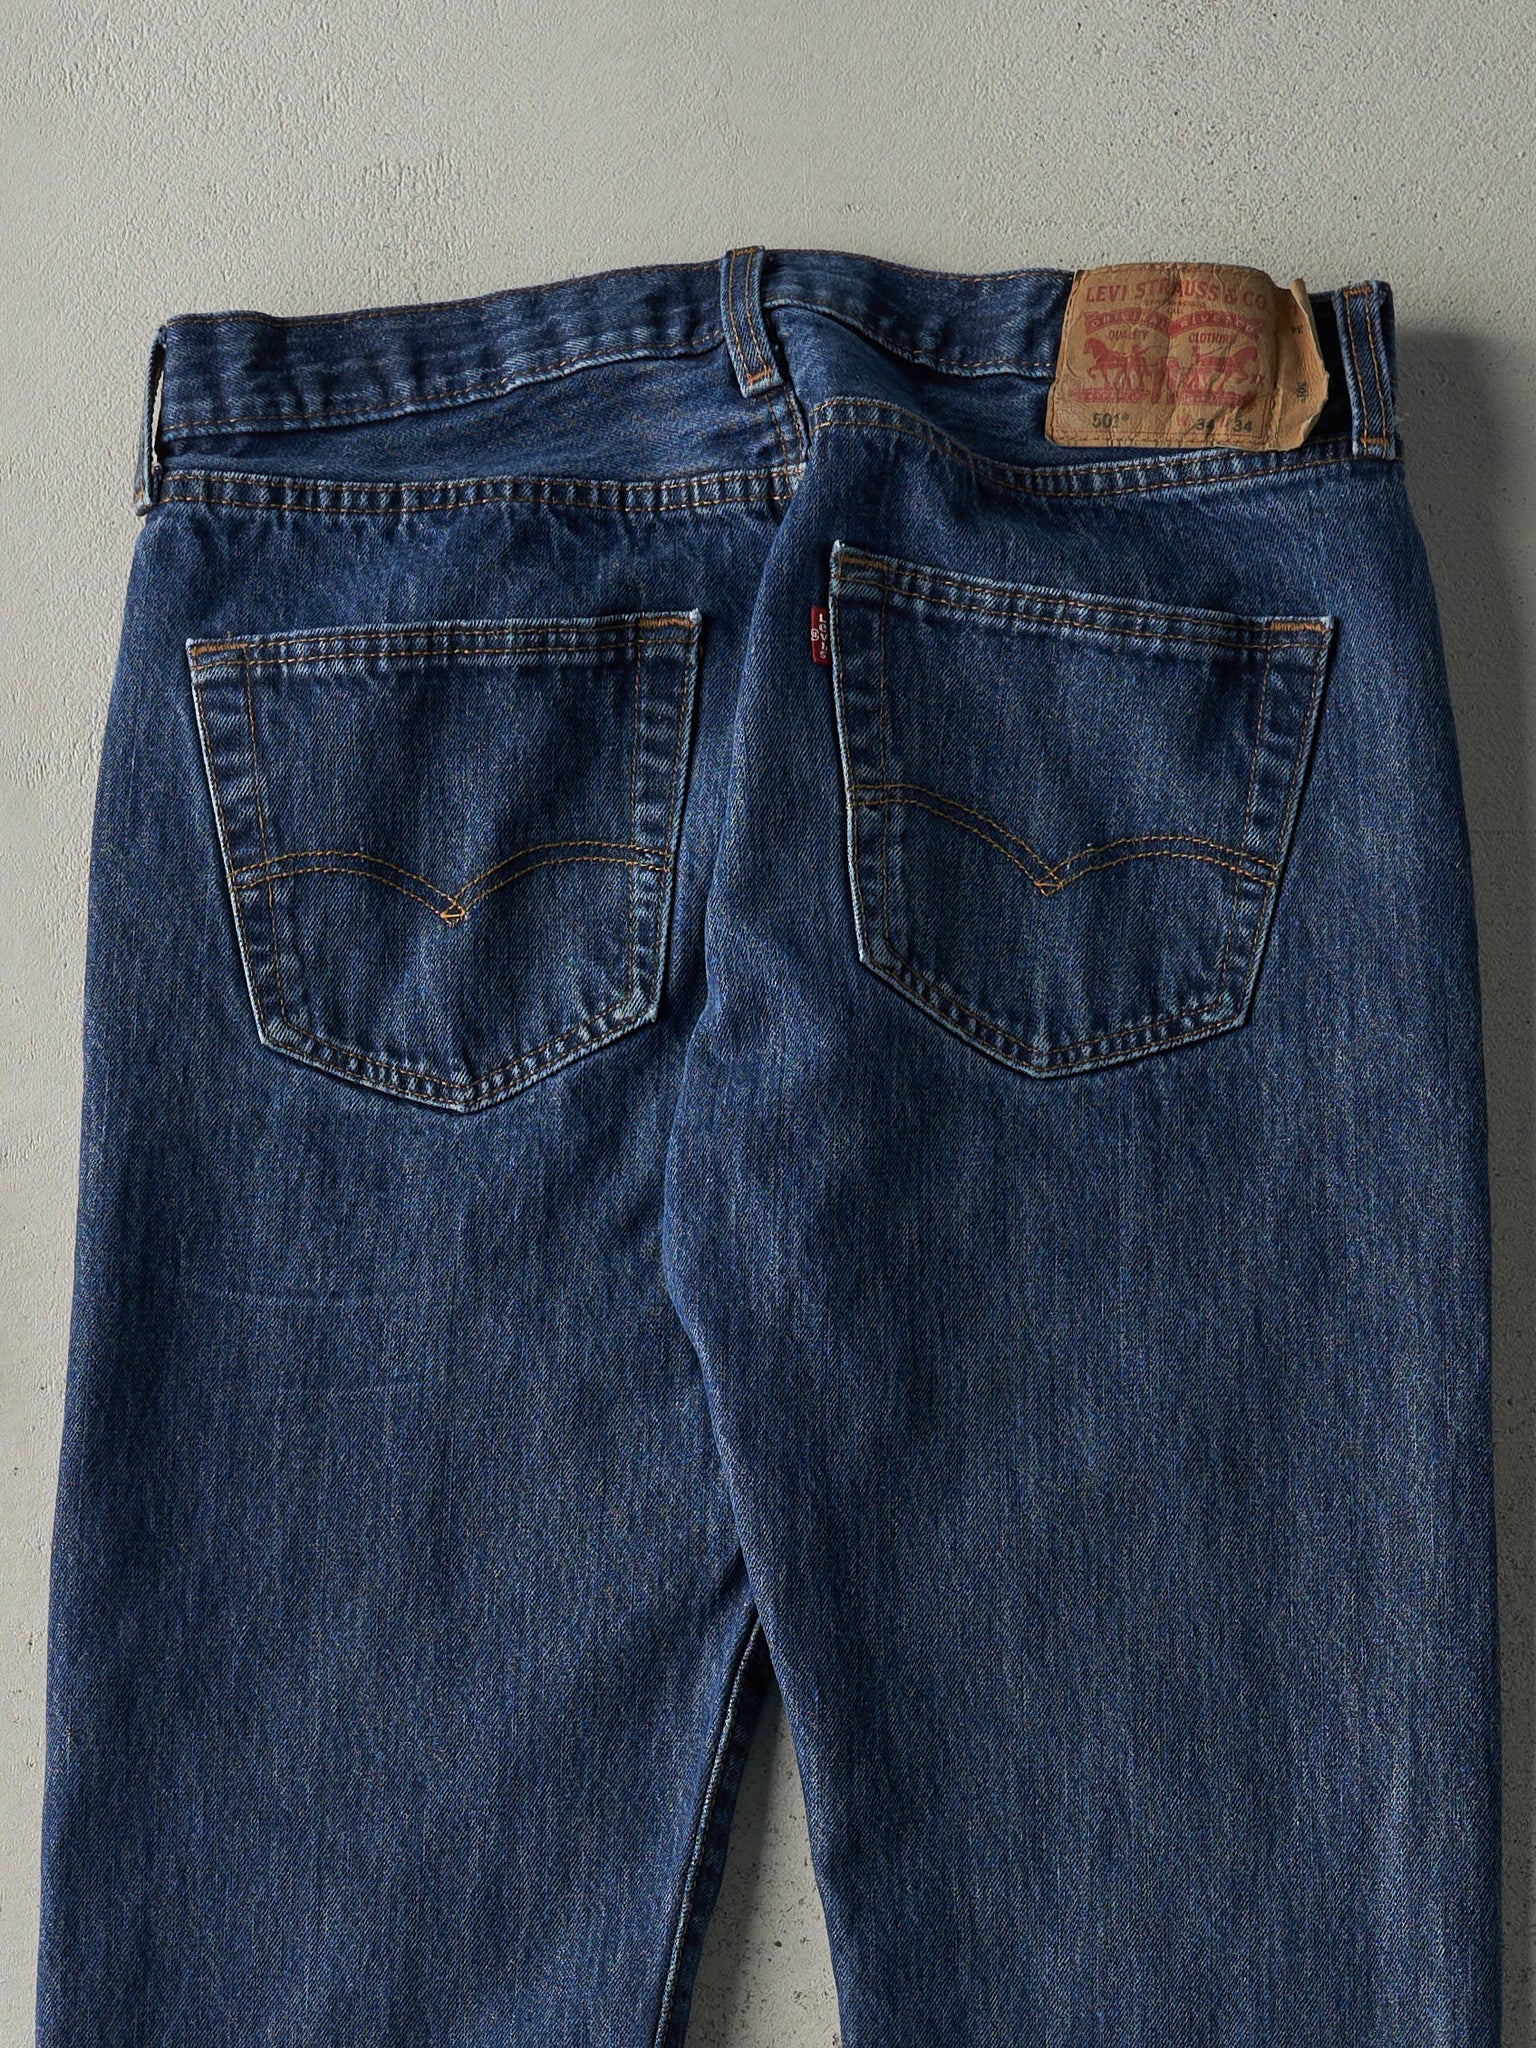 Vintage Y2K Dark Wash Levi's 501 Jeans (34x32.5)